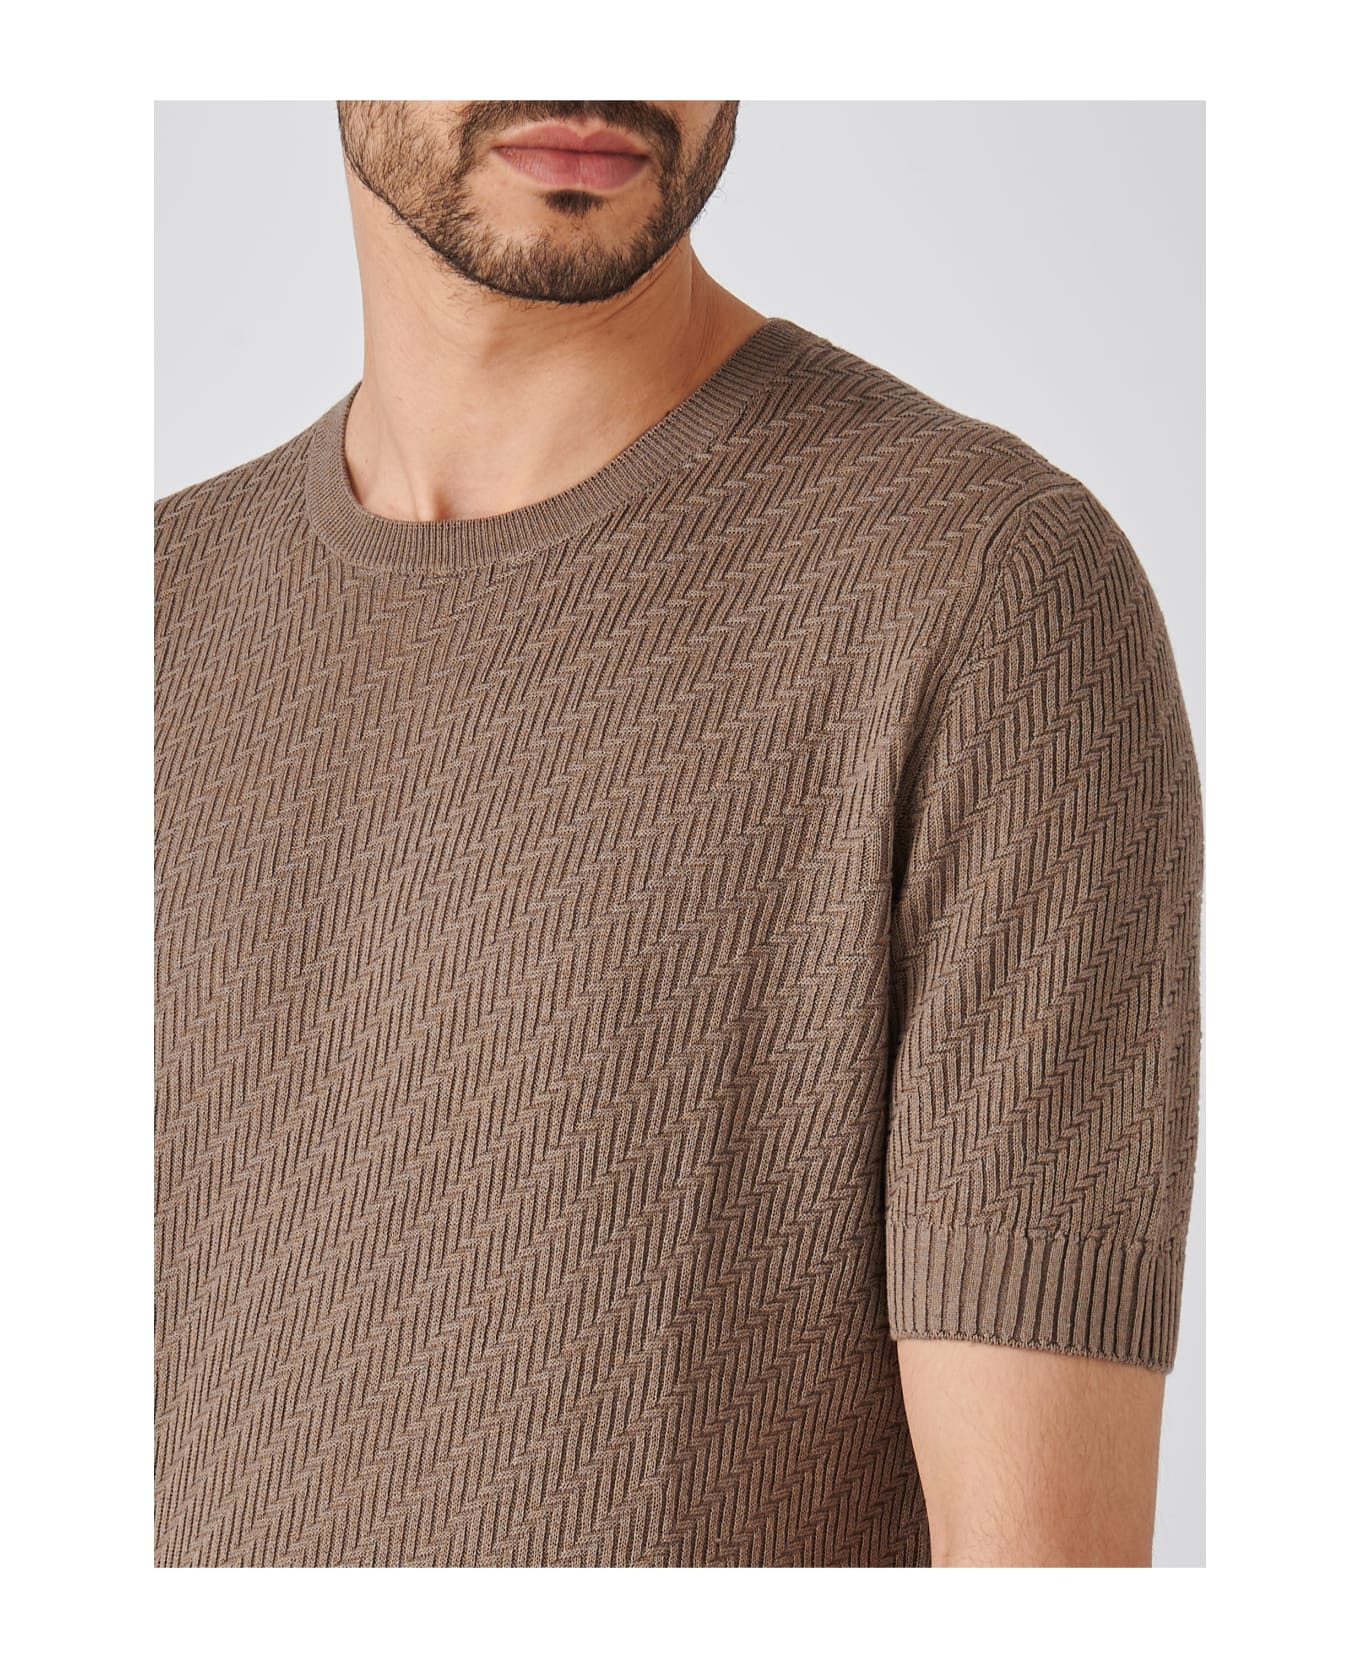 Gran Sasso Paricollo M/m Sweater - CORDA ニットウェア